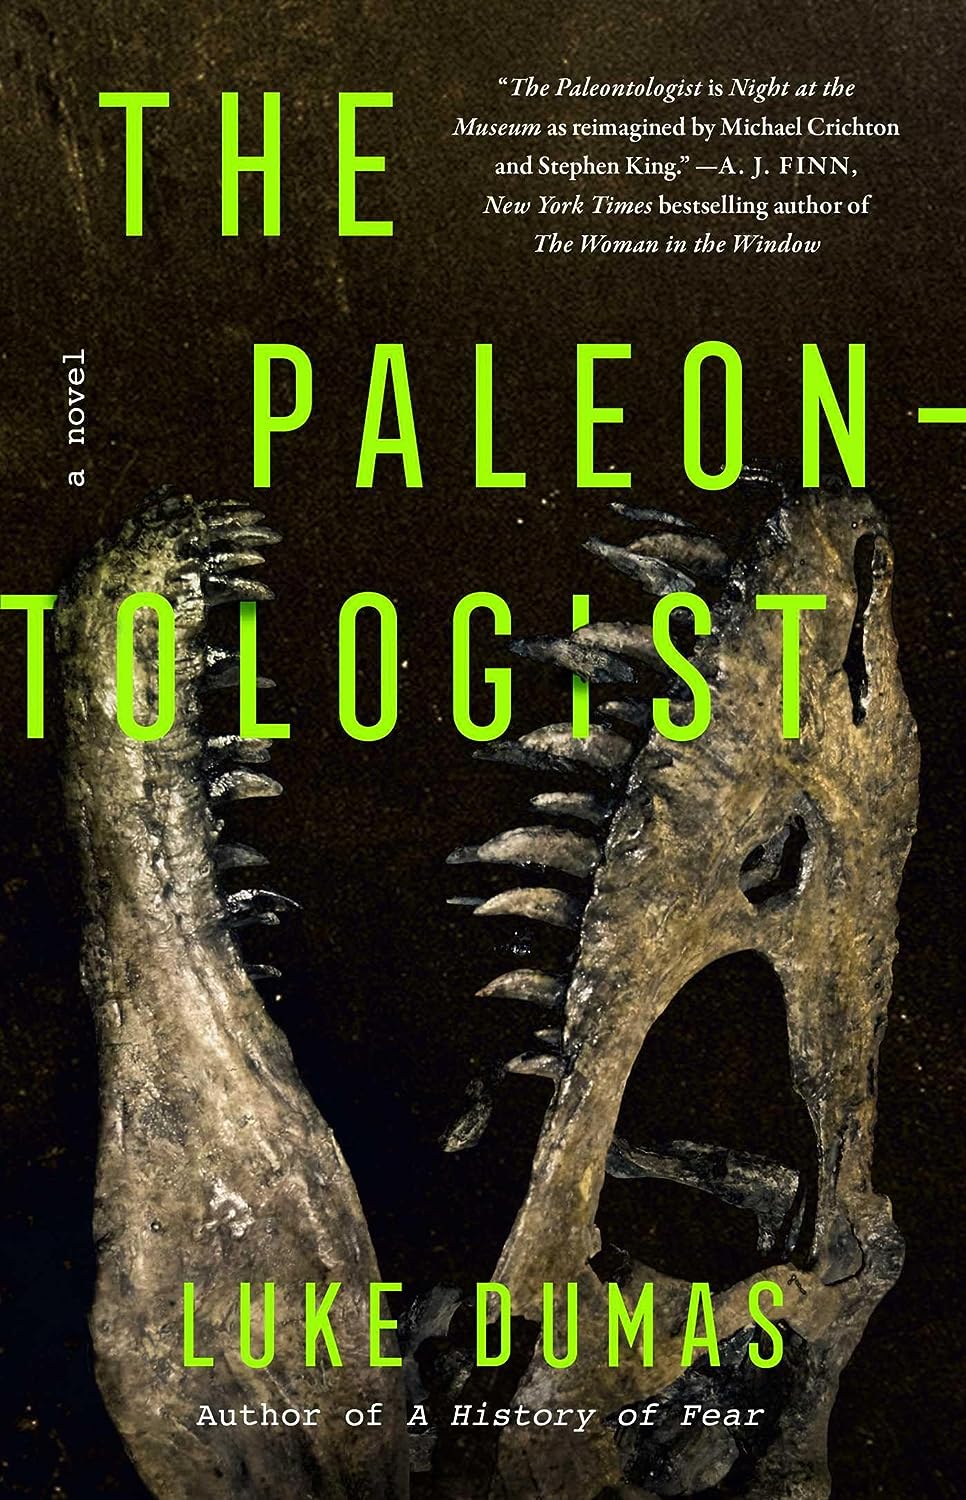 Image for "The Paleontologist"